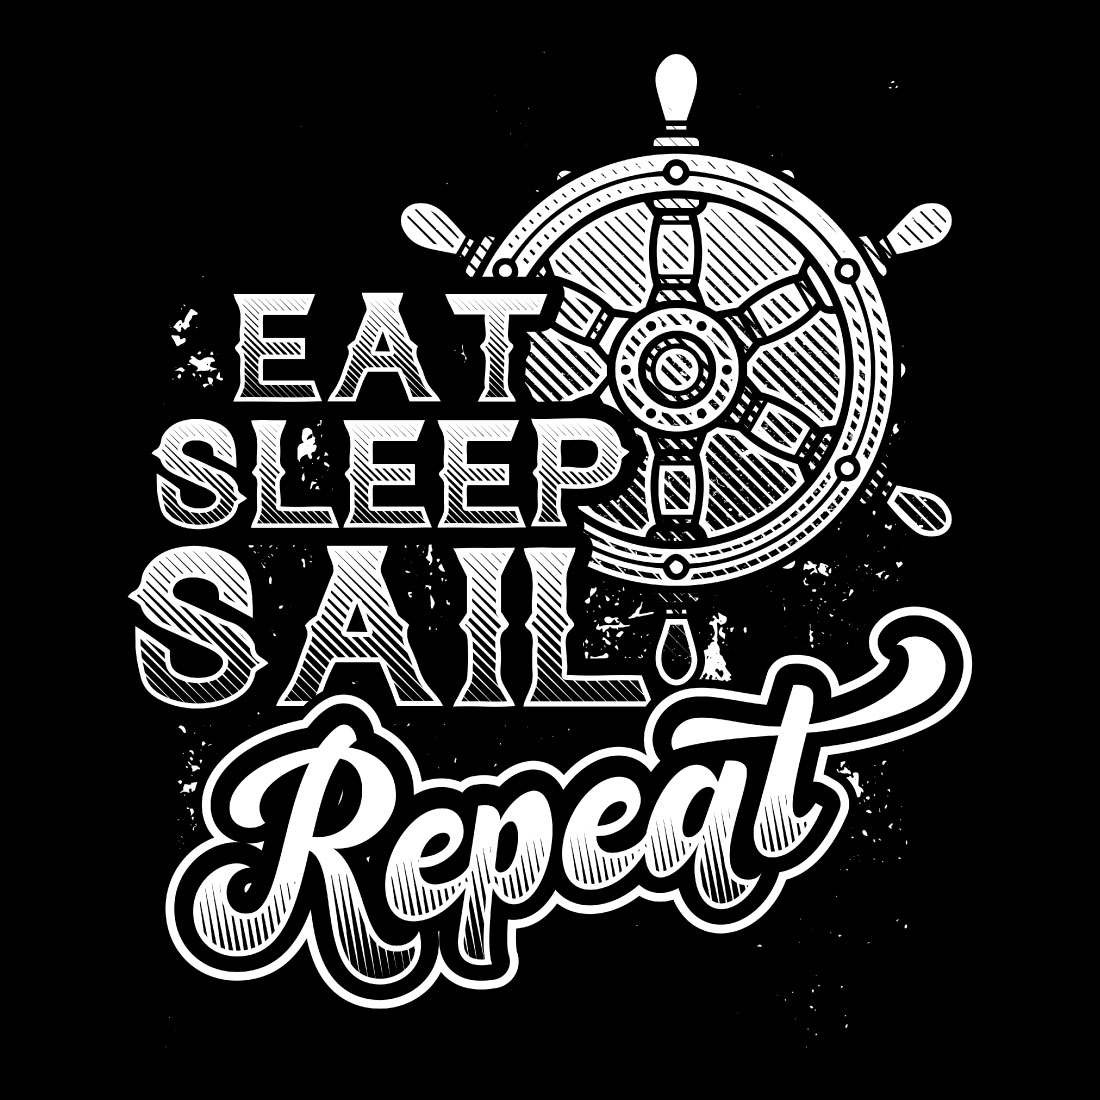 eat sleep sail repeat sailing t shirt design preview image.